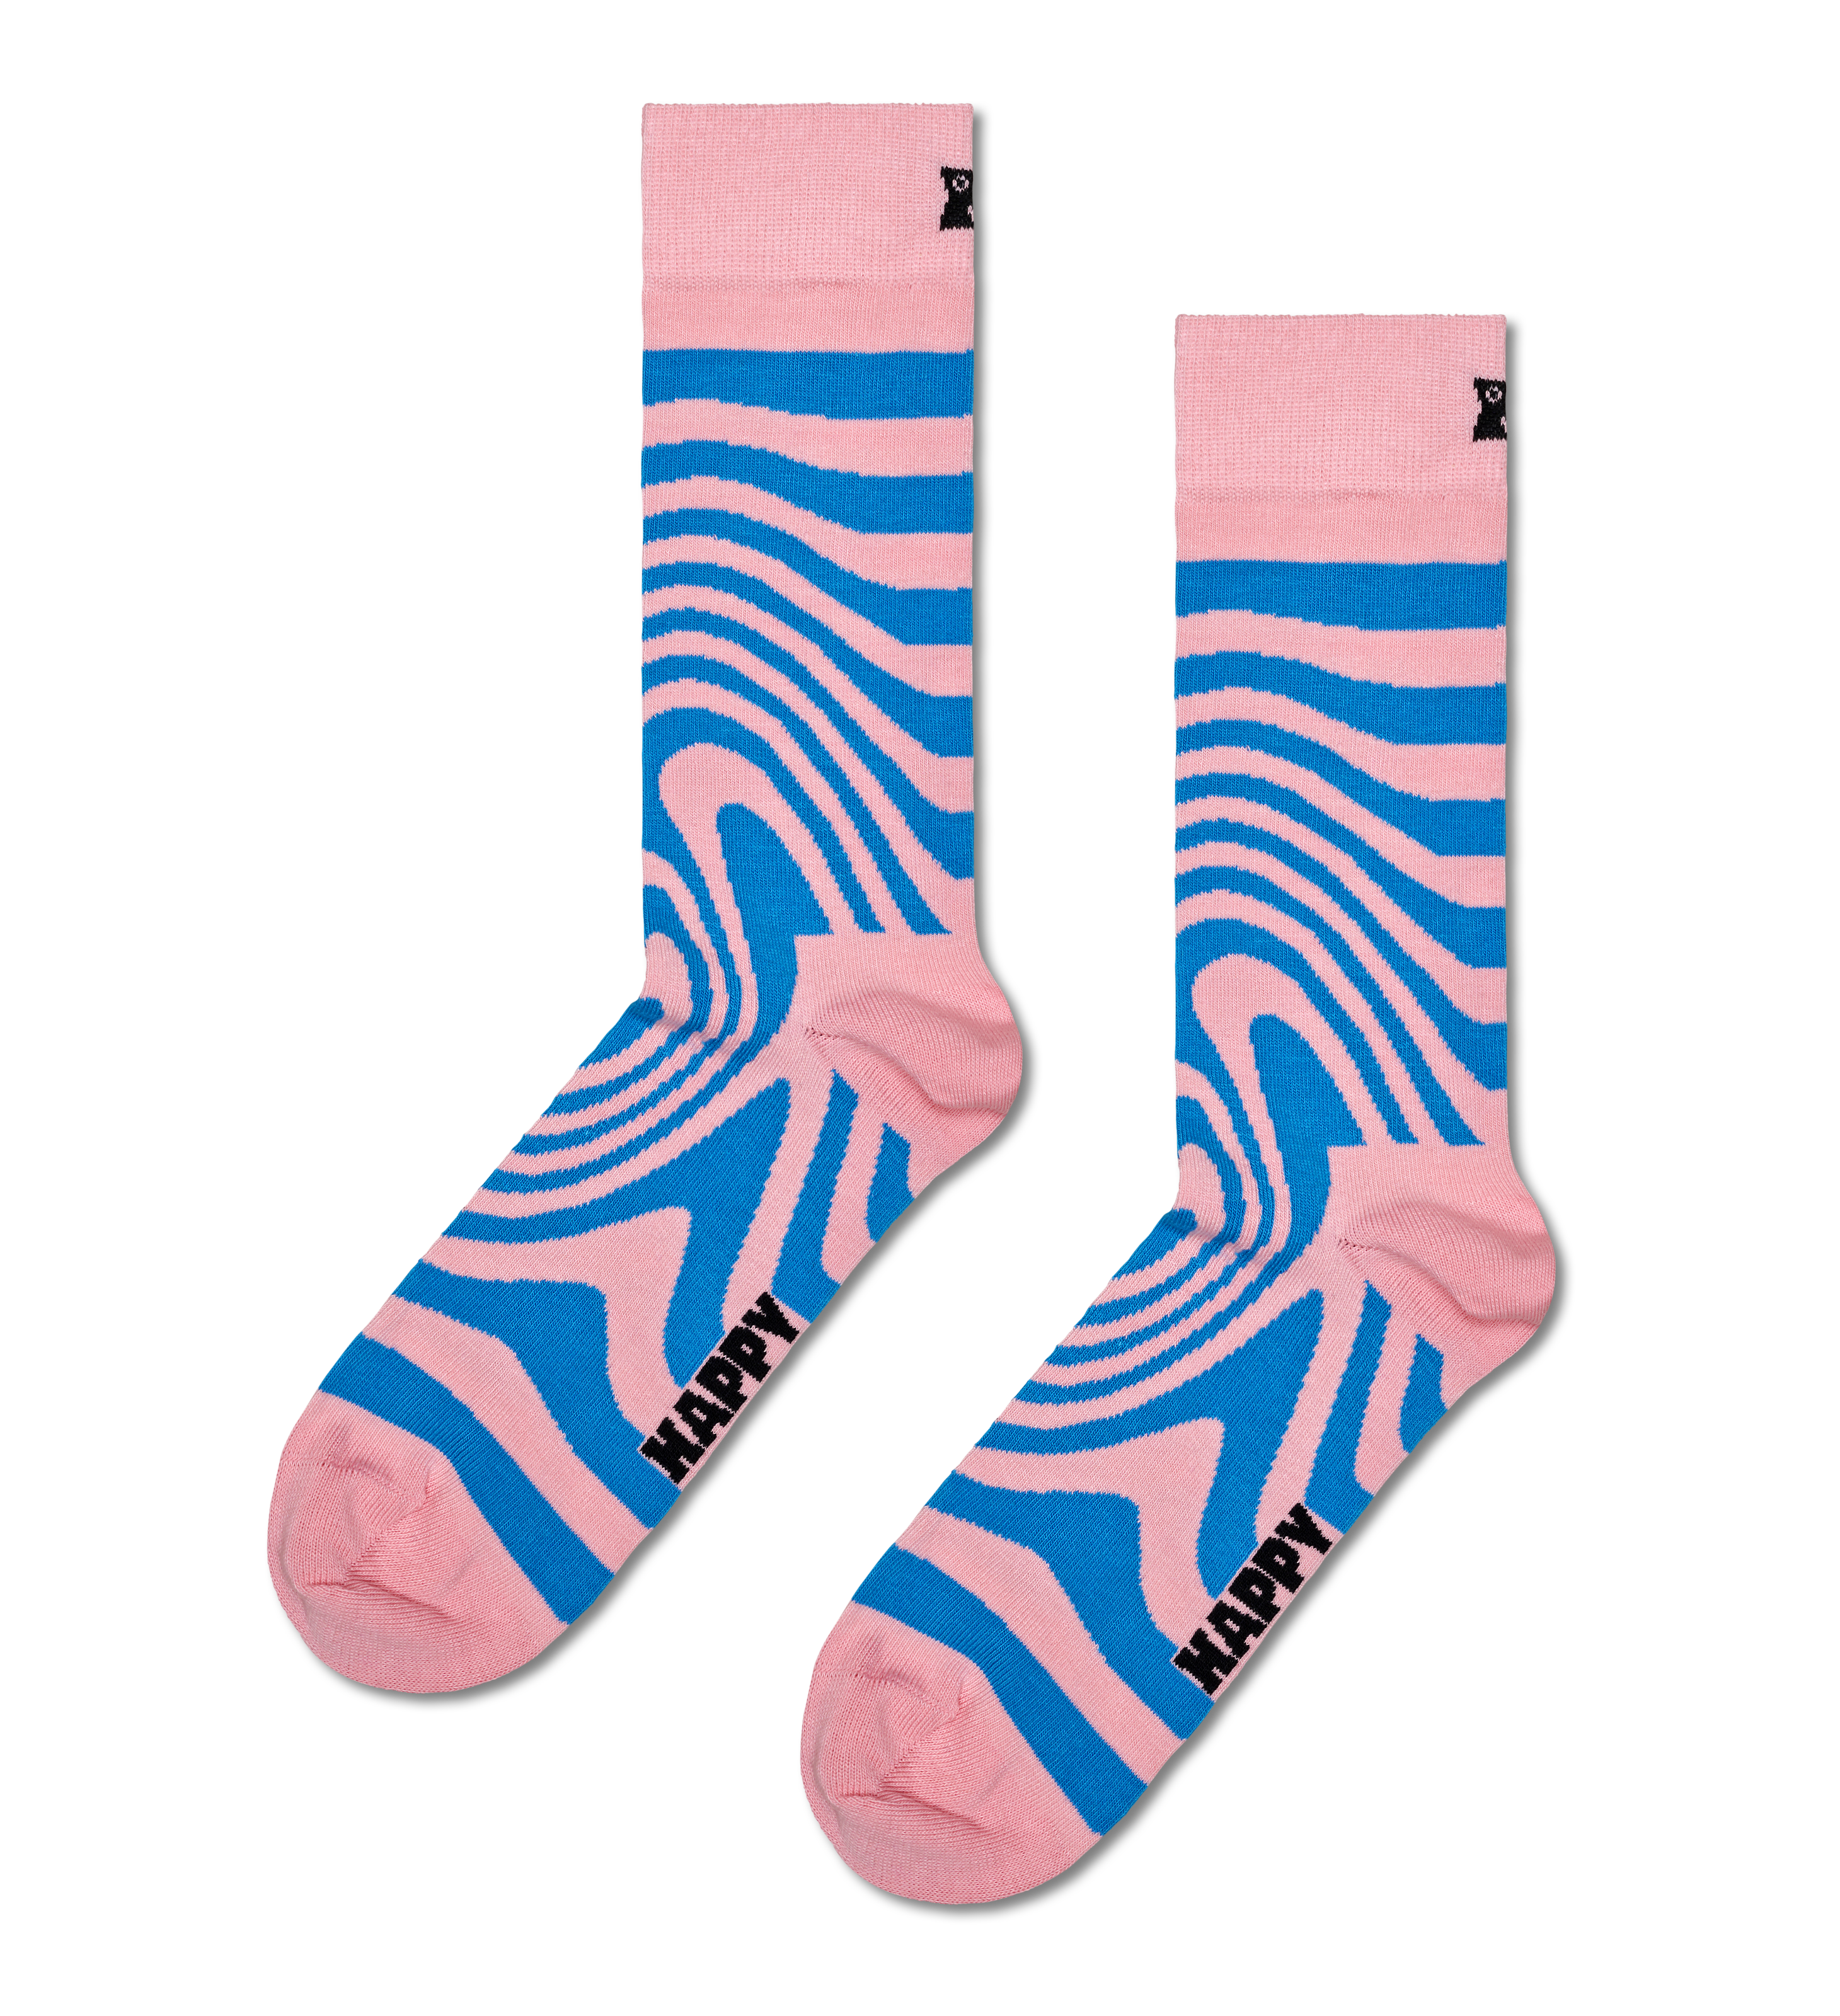 All Adult Socks for men and women